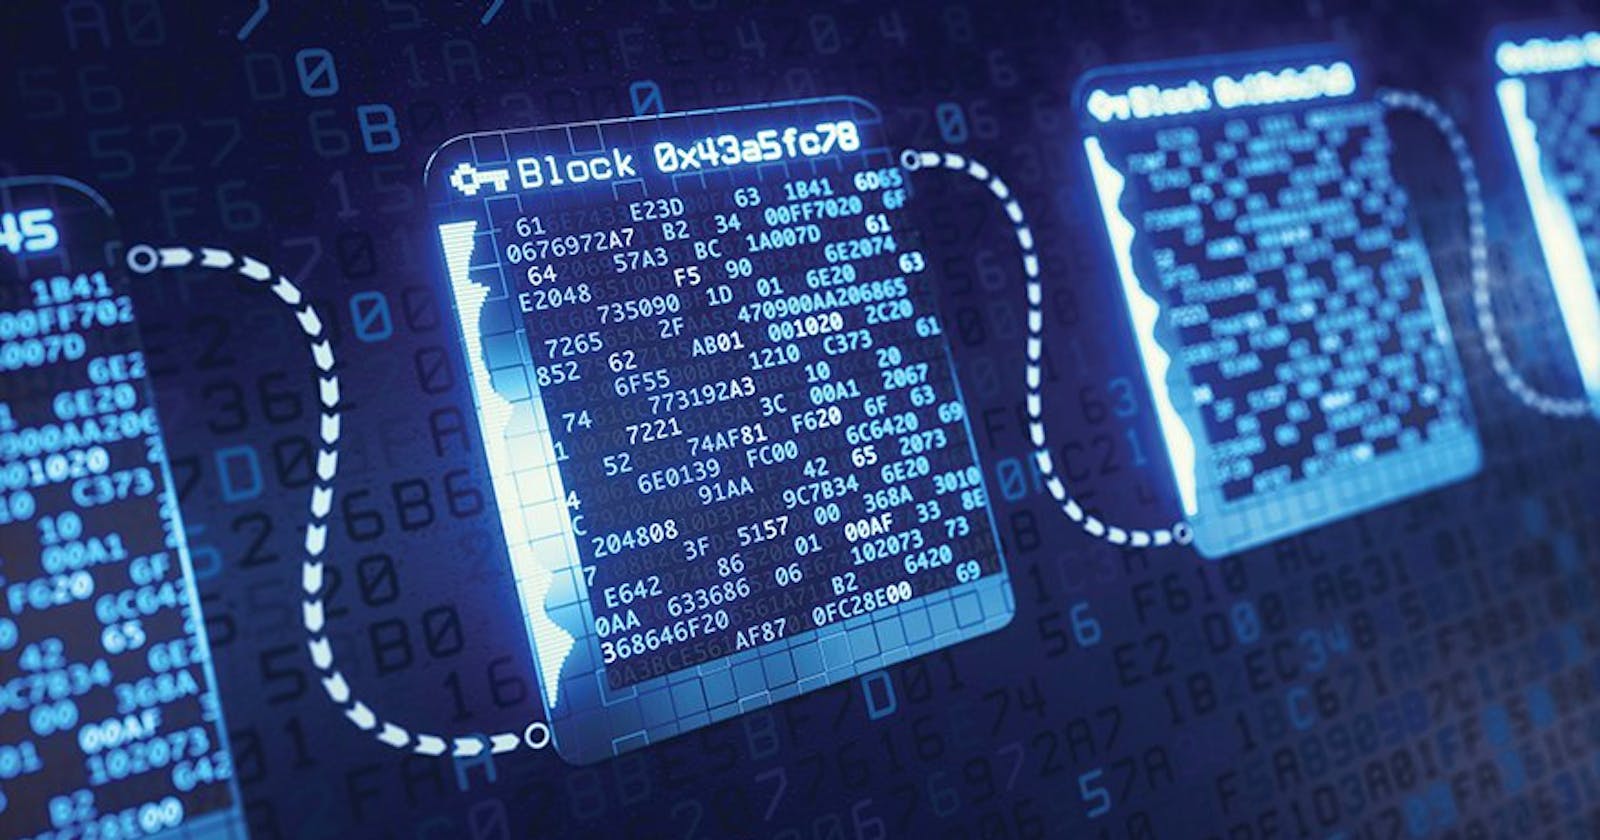 Basics of Blockchain technology